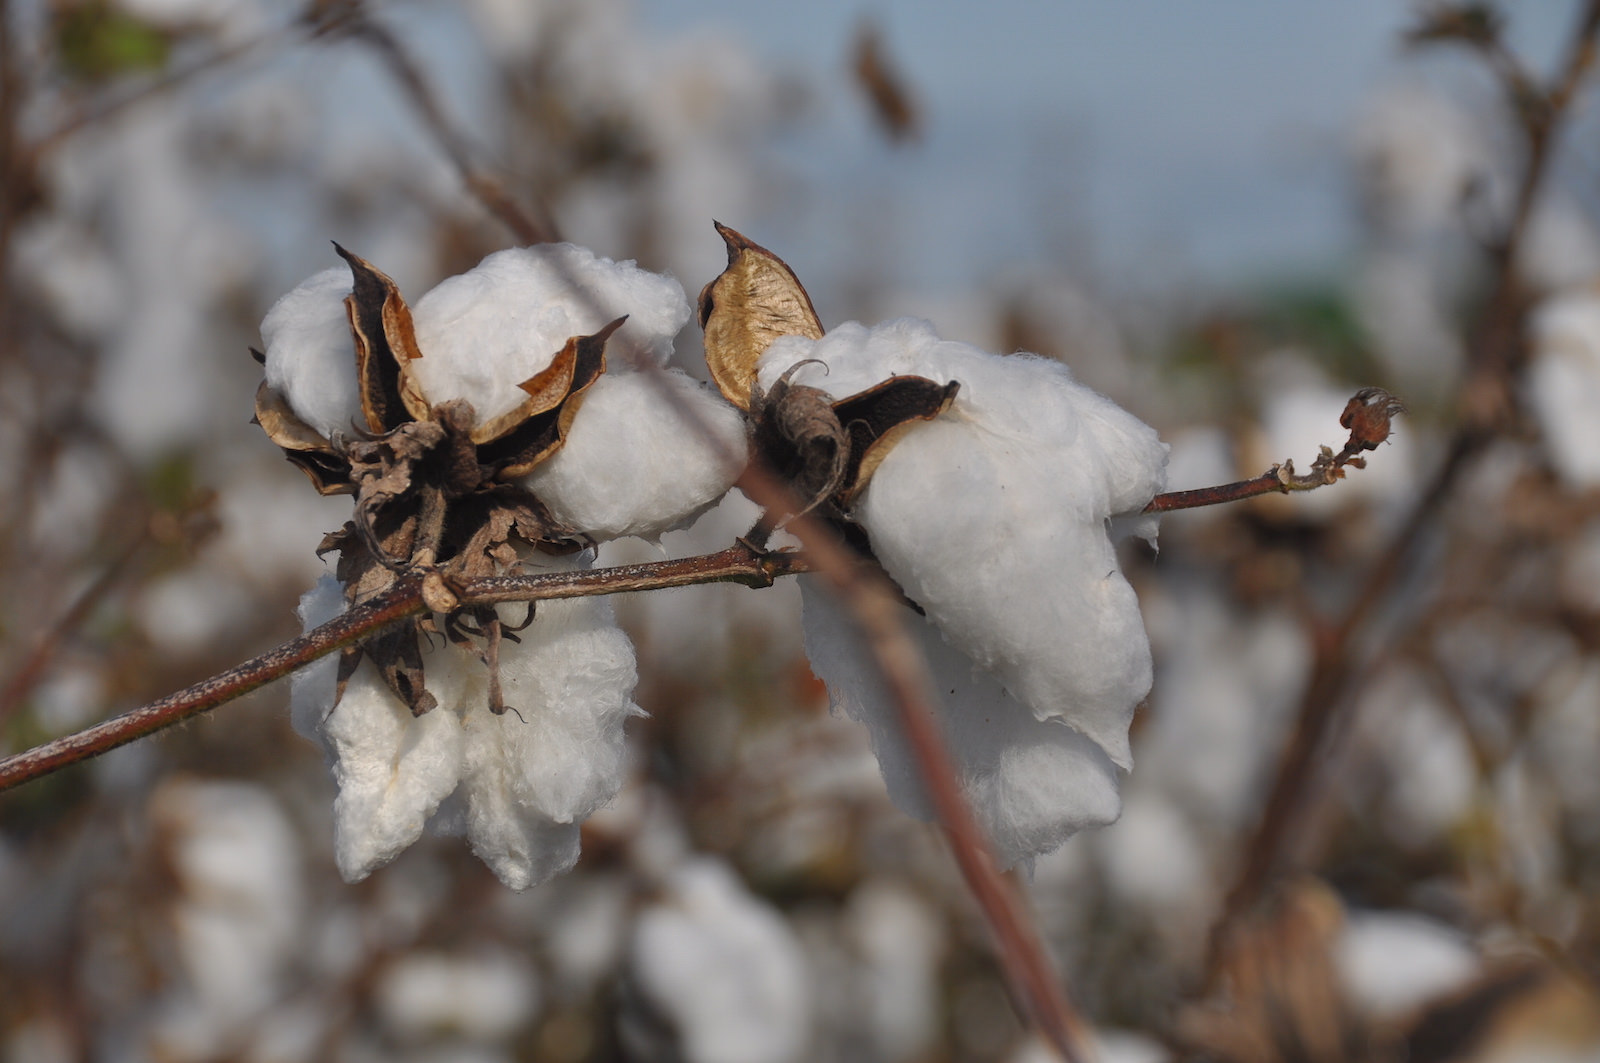 cotton with debris